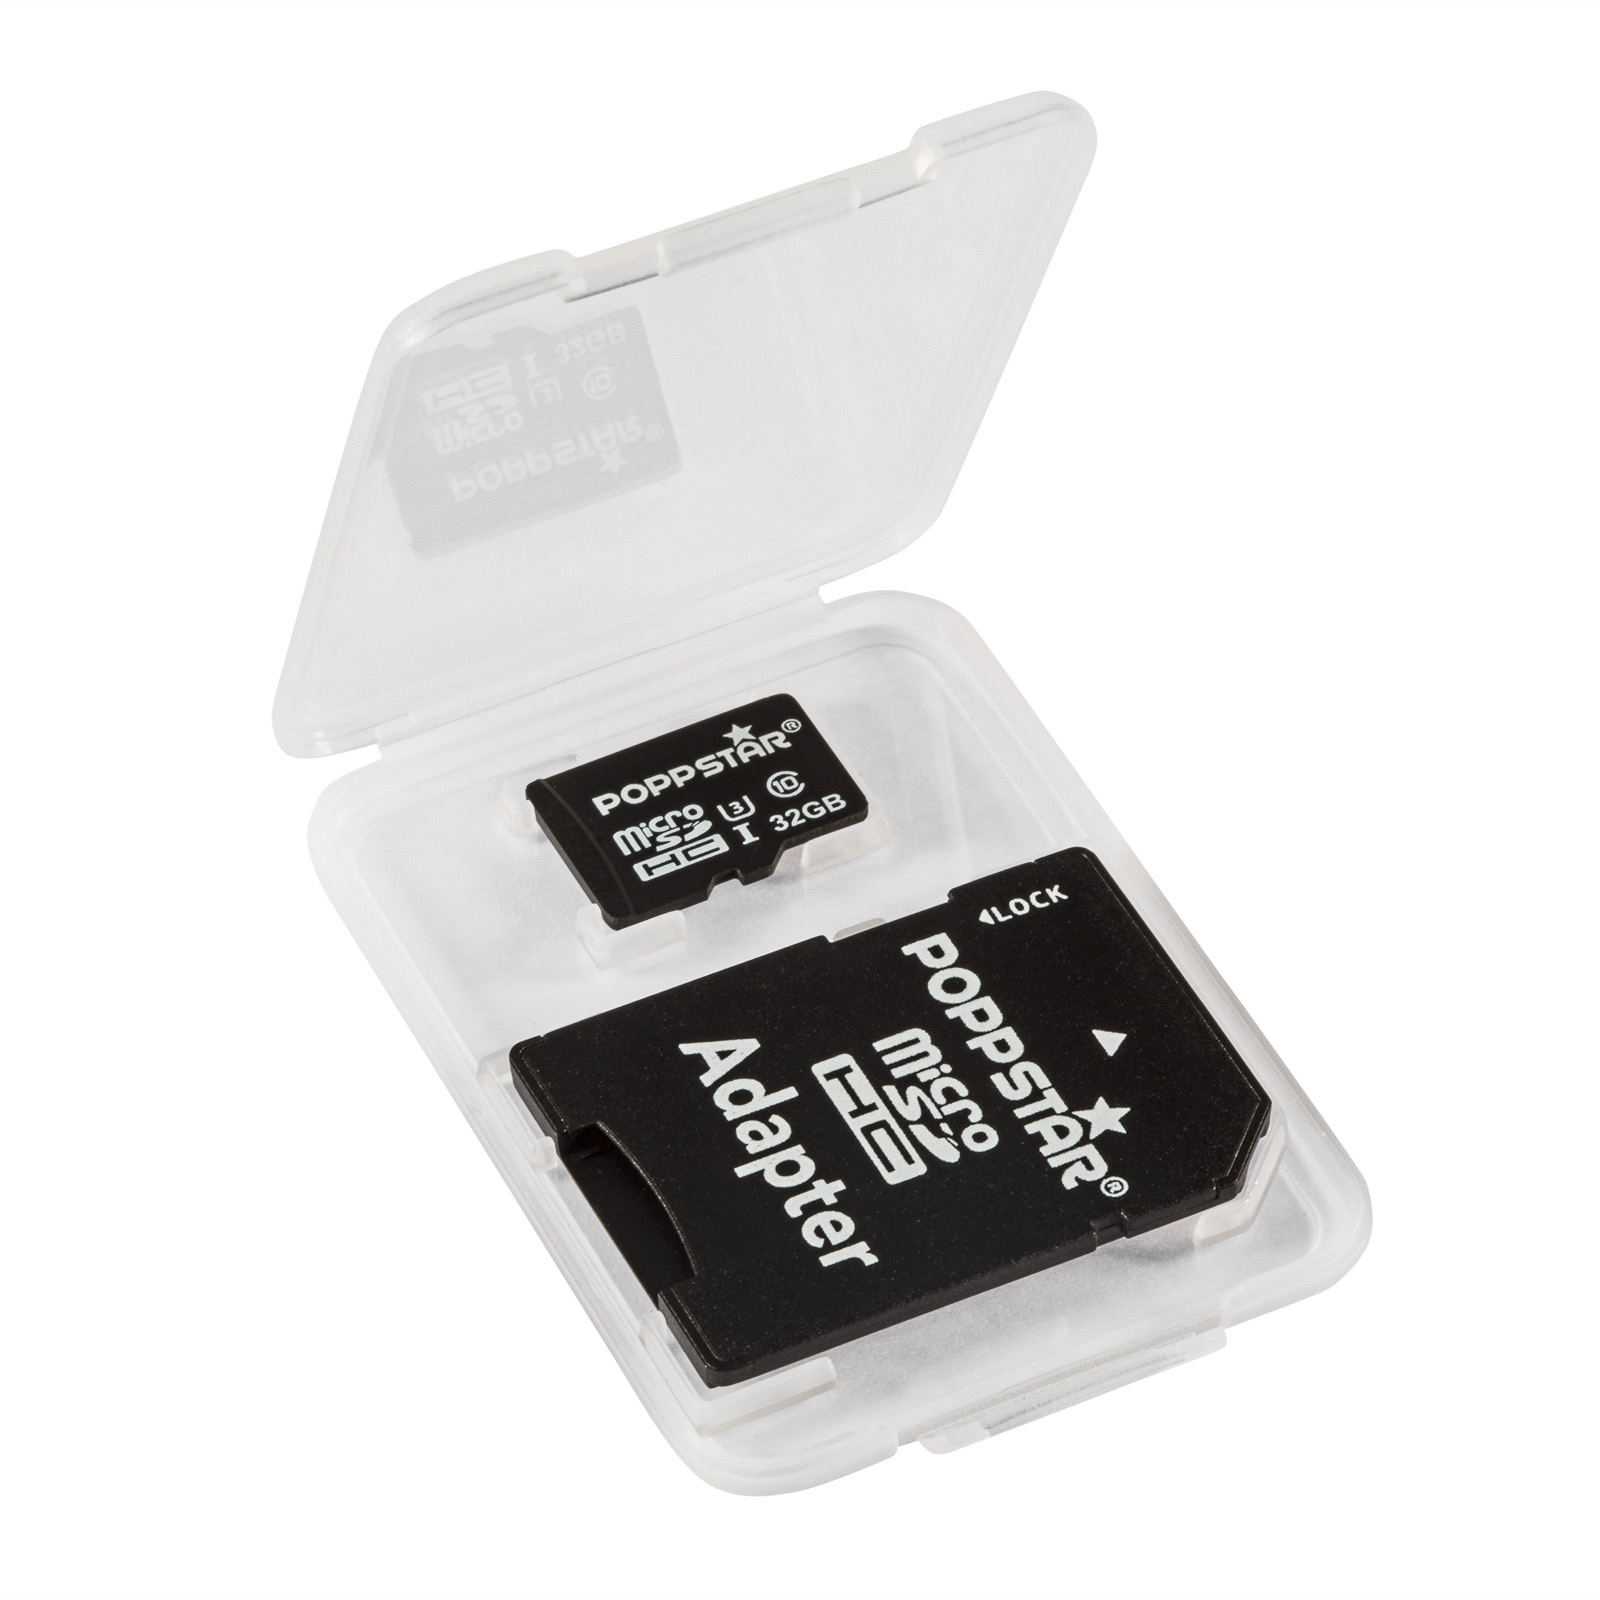 Speicherkartenhülle für Speicherkarten SD/MMC/MicroSD, 10 Stück